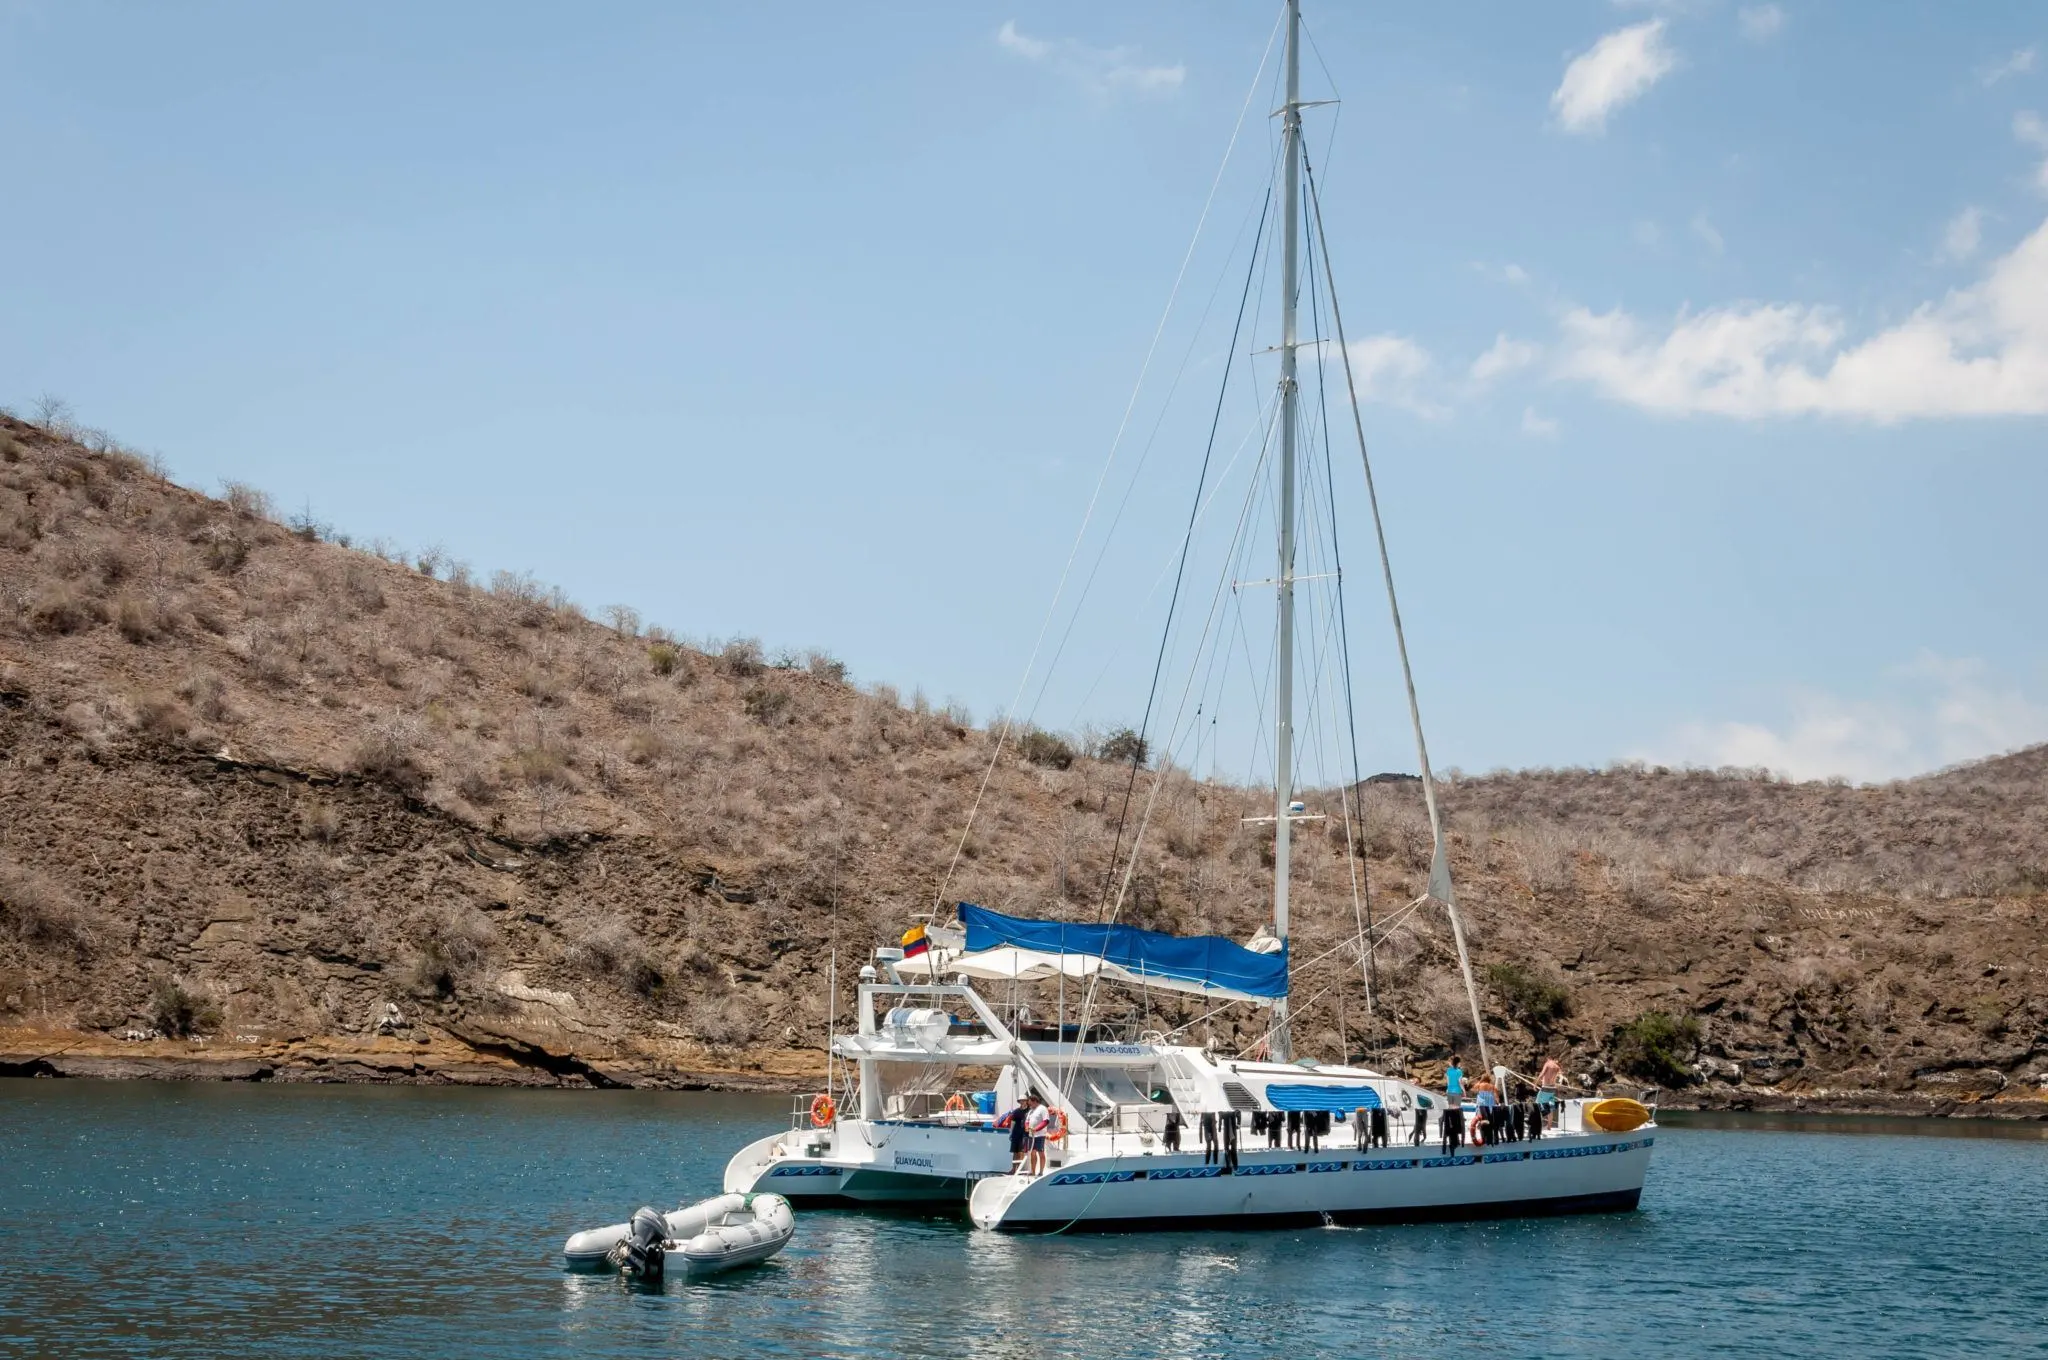 A catamaran boat in the Galapagos